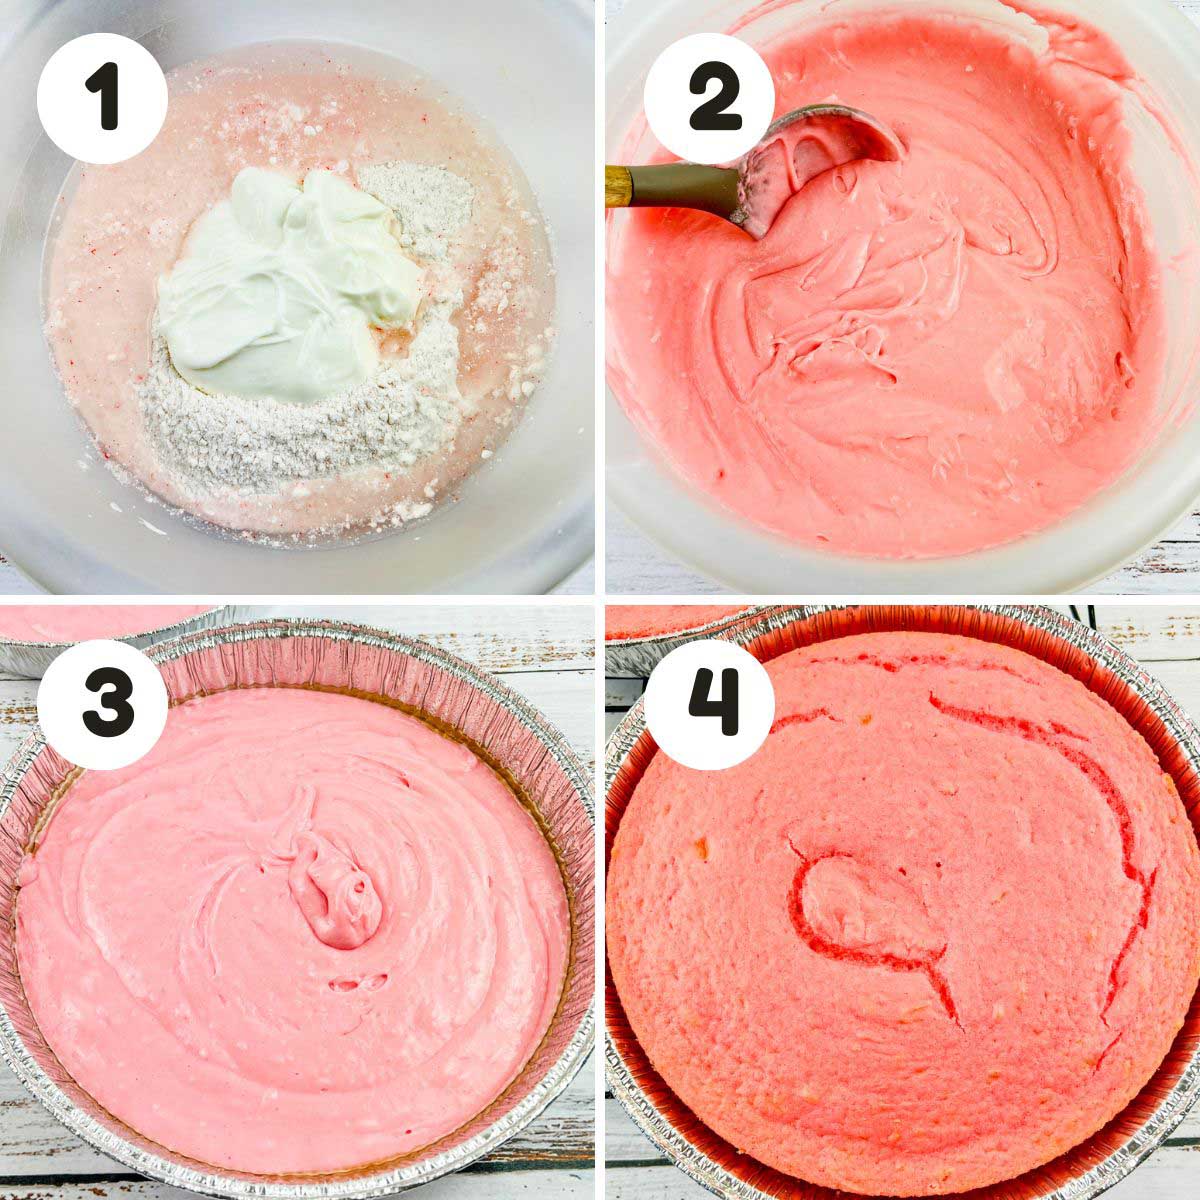 Steps to make the strawberry cake.